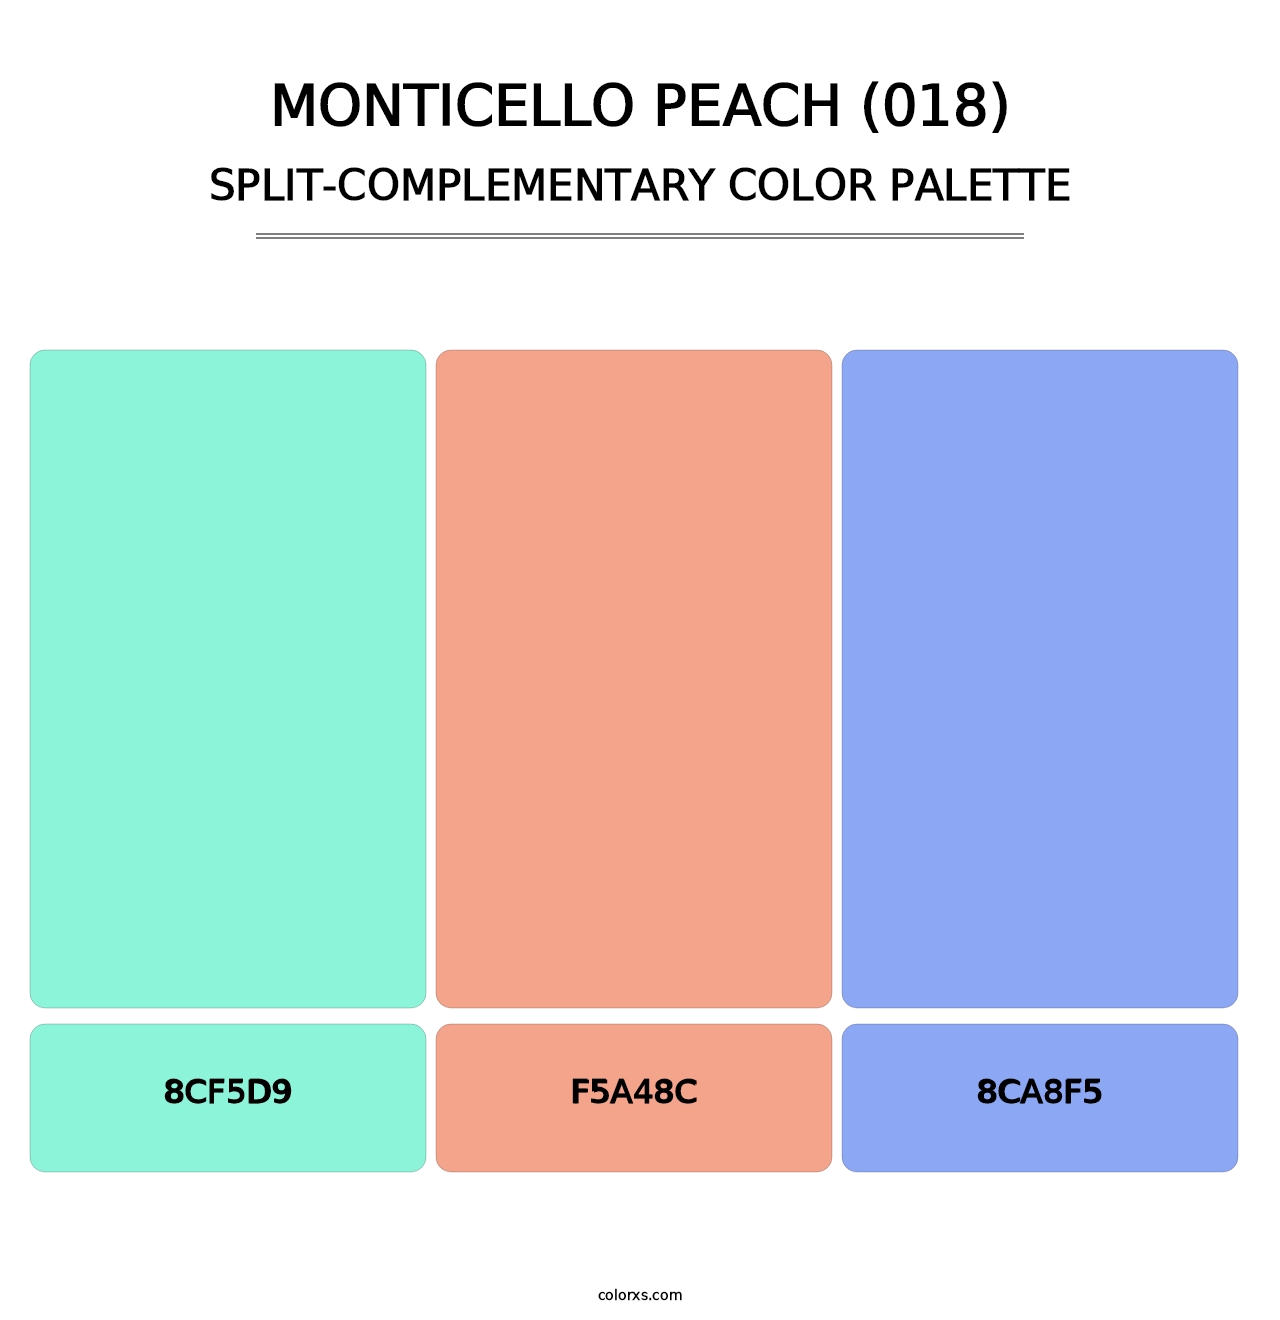 Monticello Peach (018) - Split-Complementary Color Palette